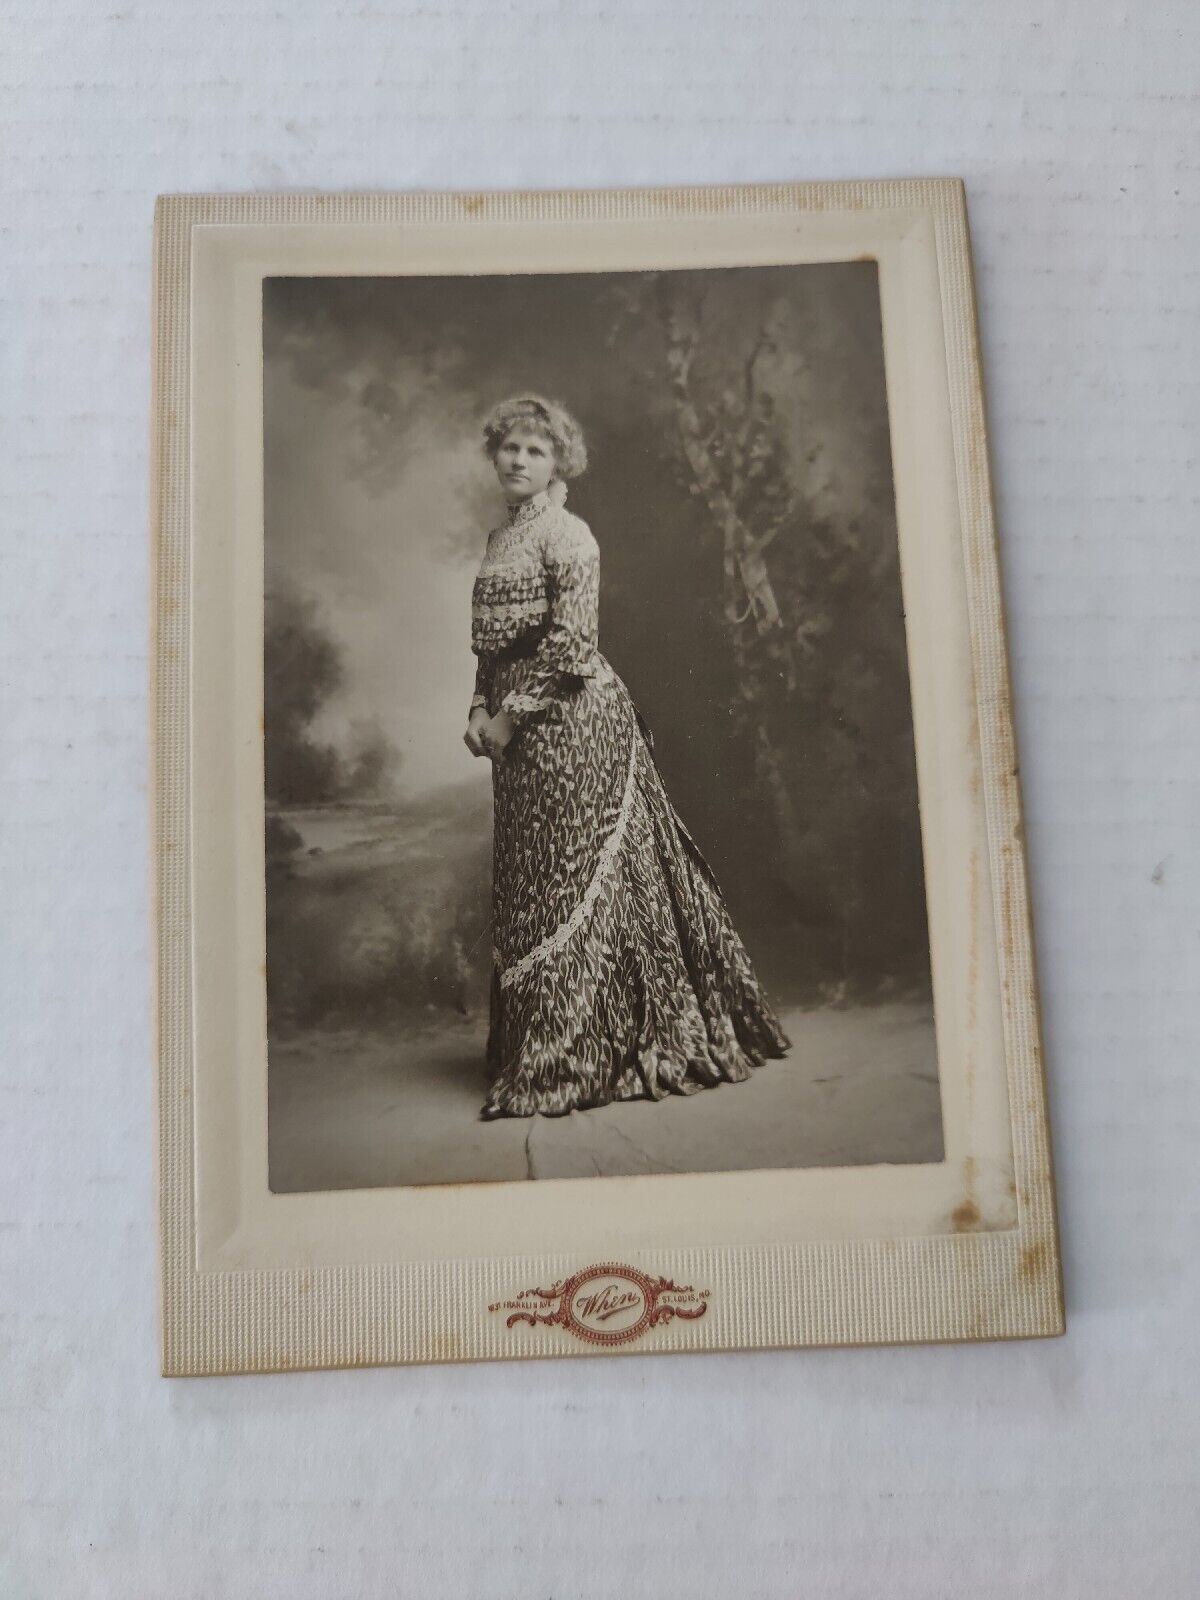 Vintage Cabinet Card Lady in Dress by When in St. Louis, Missouri